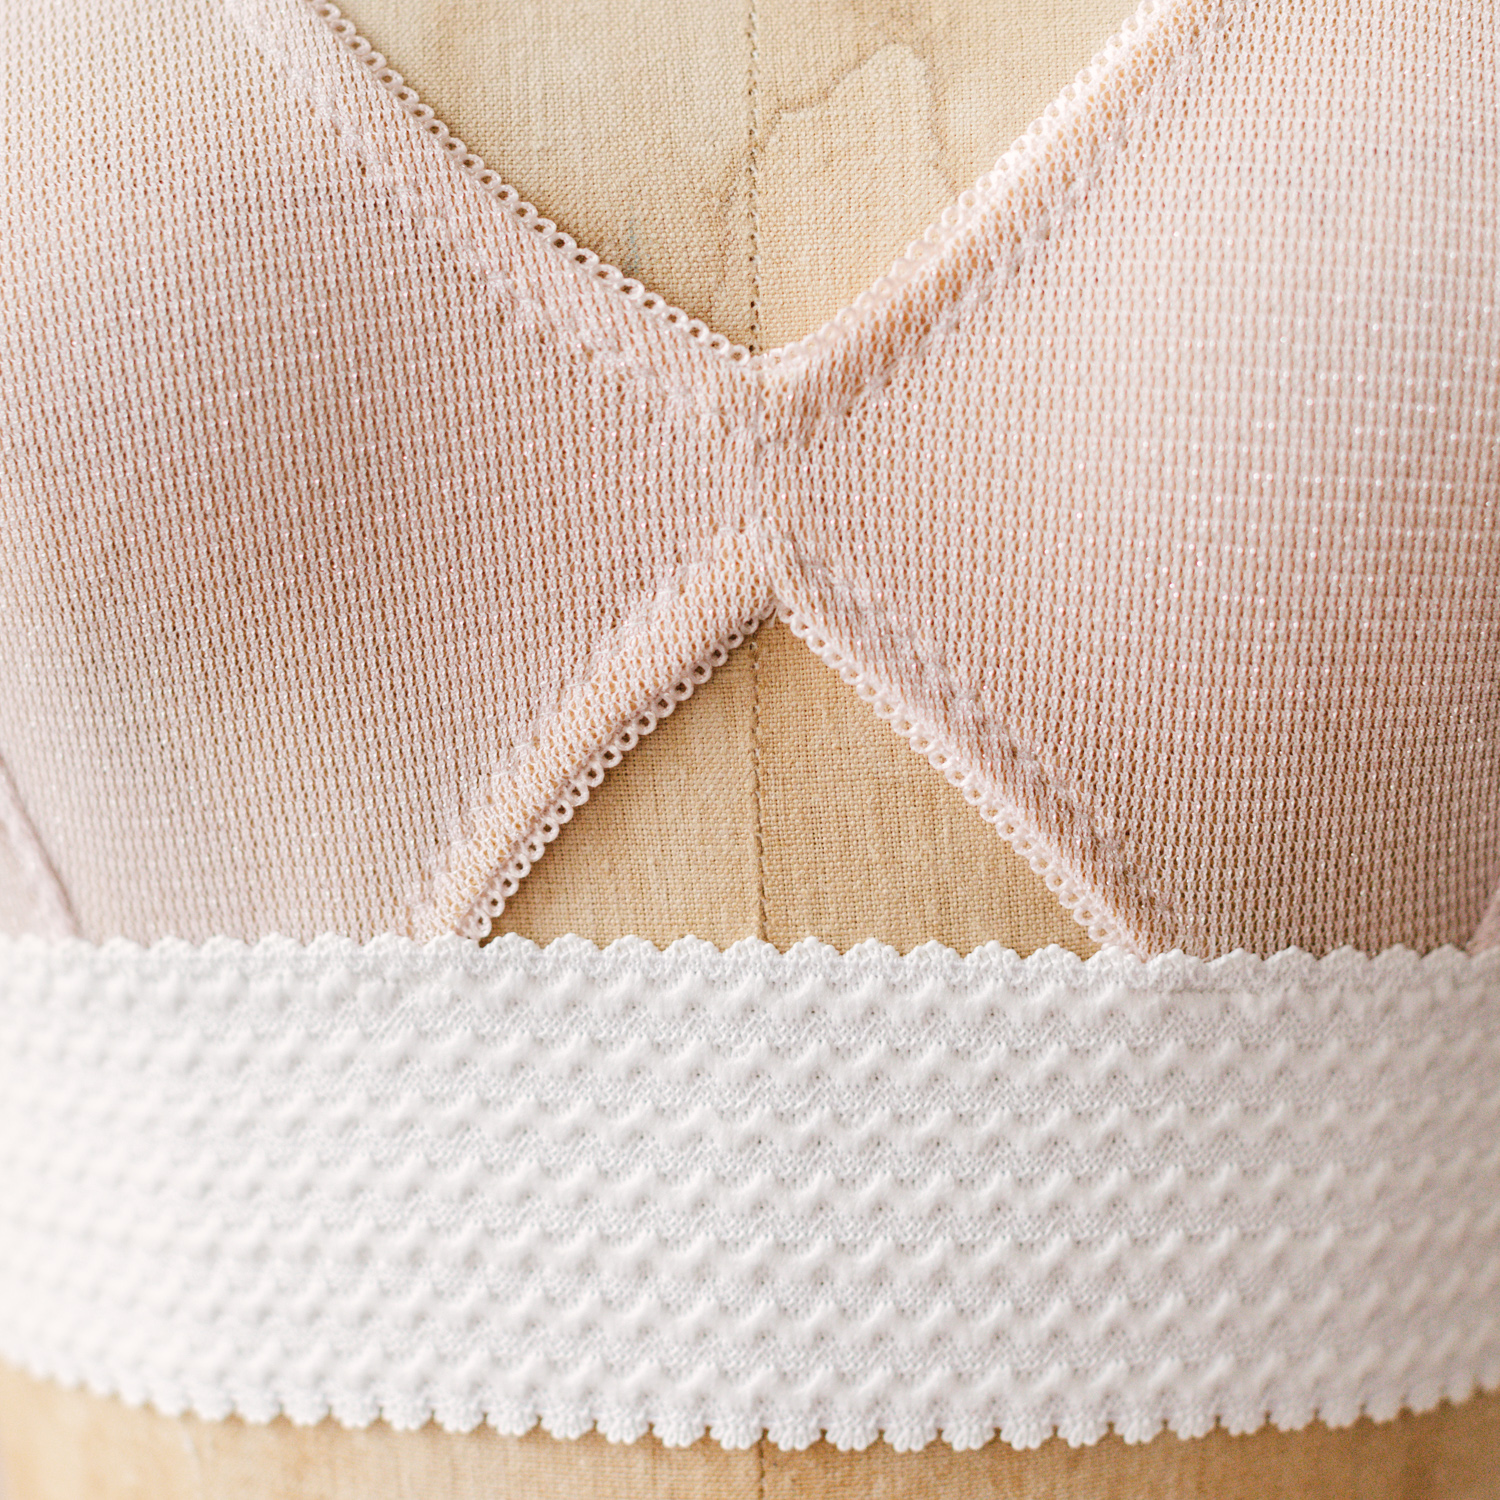 Barrett Bralette Sewing Kit in Blush Pink by Madalynne Intimates